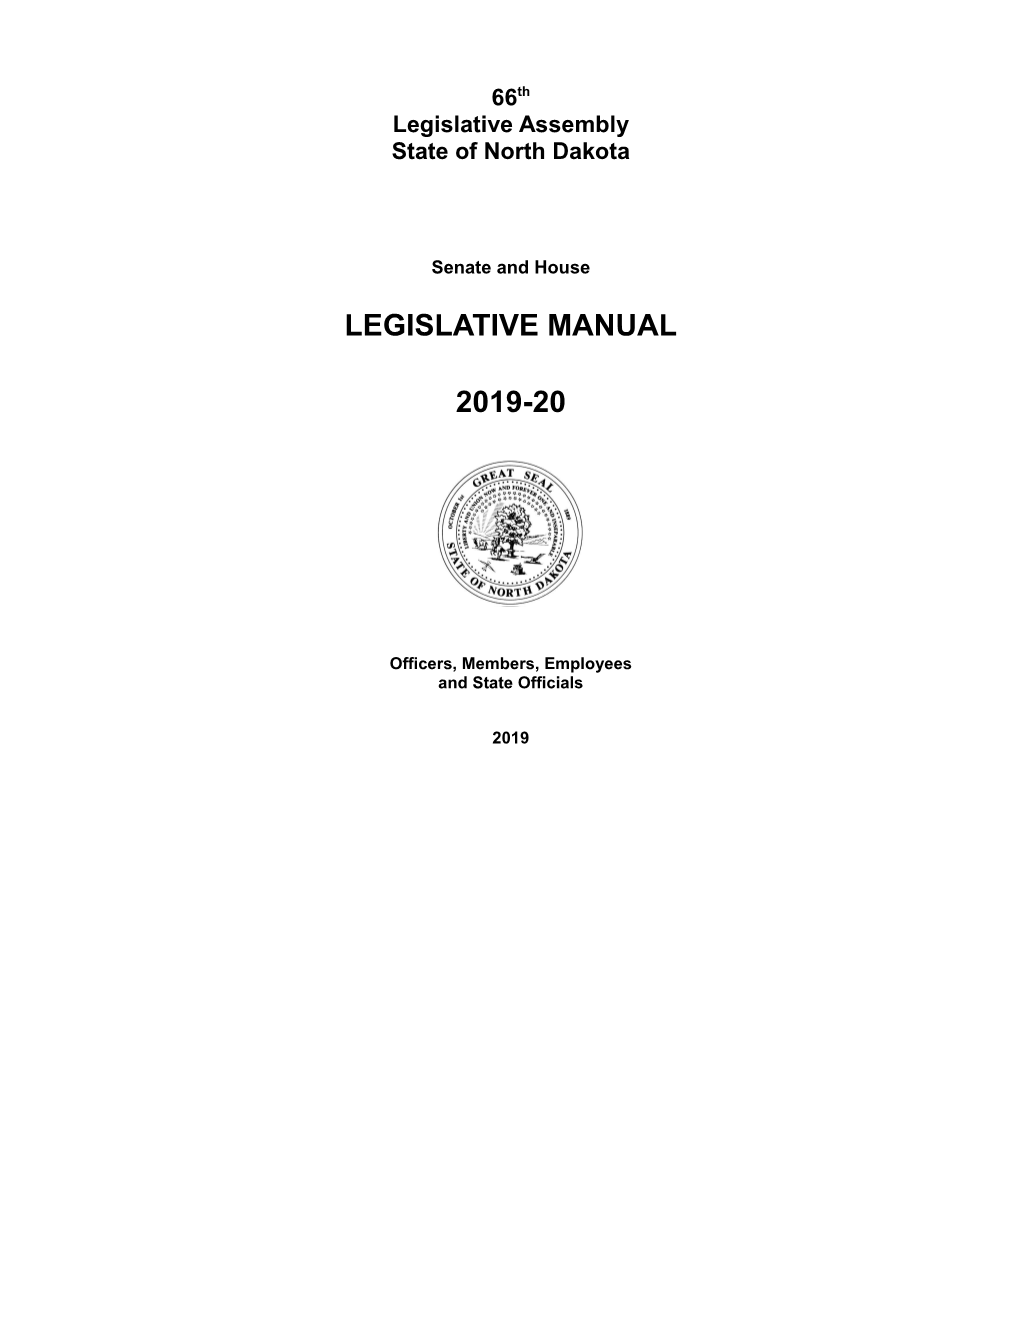 Legislative Manual 2019-20